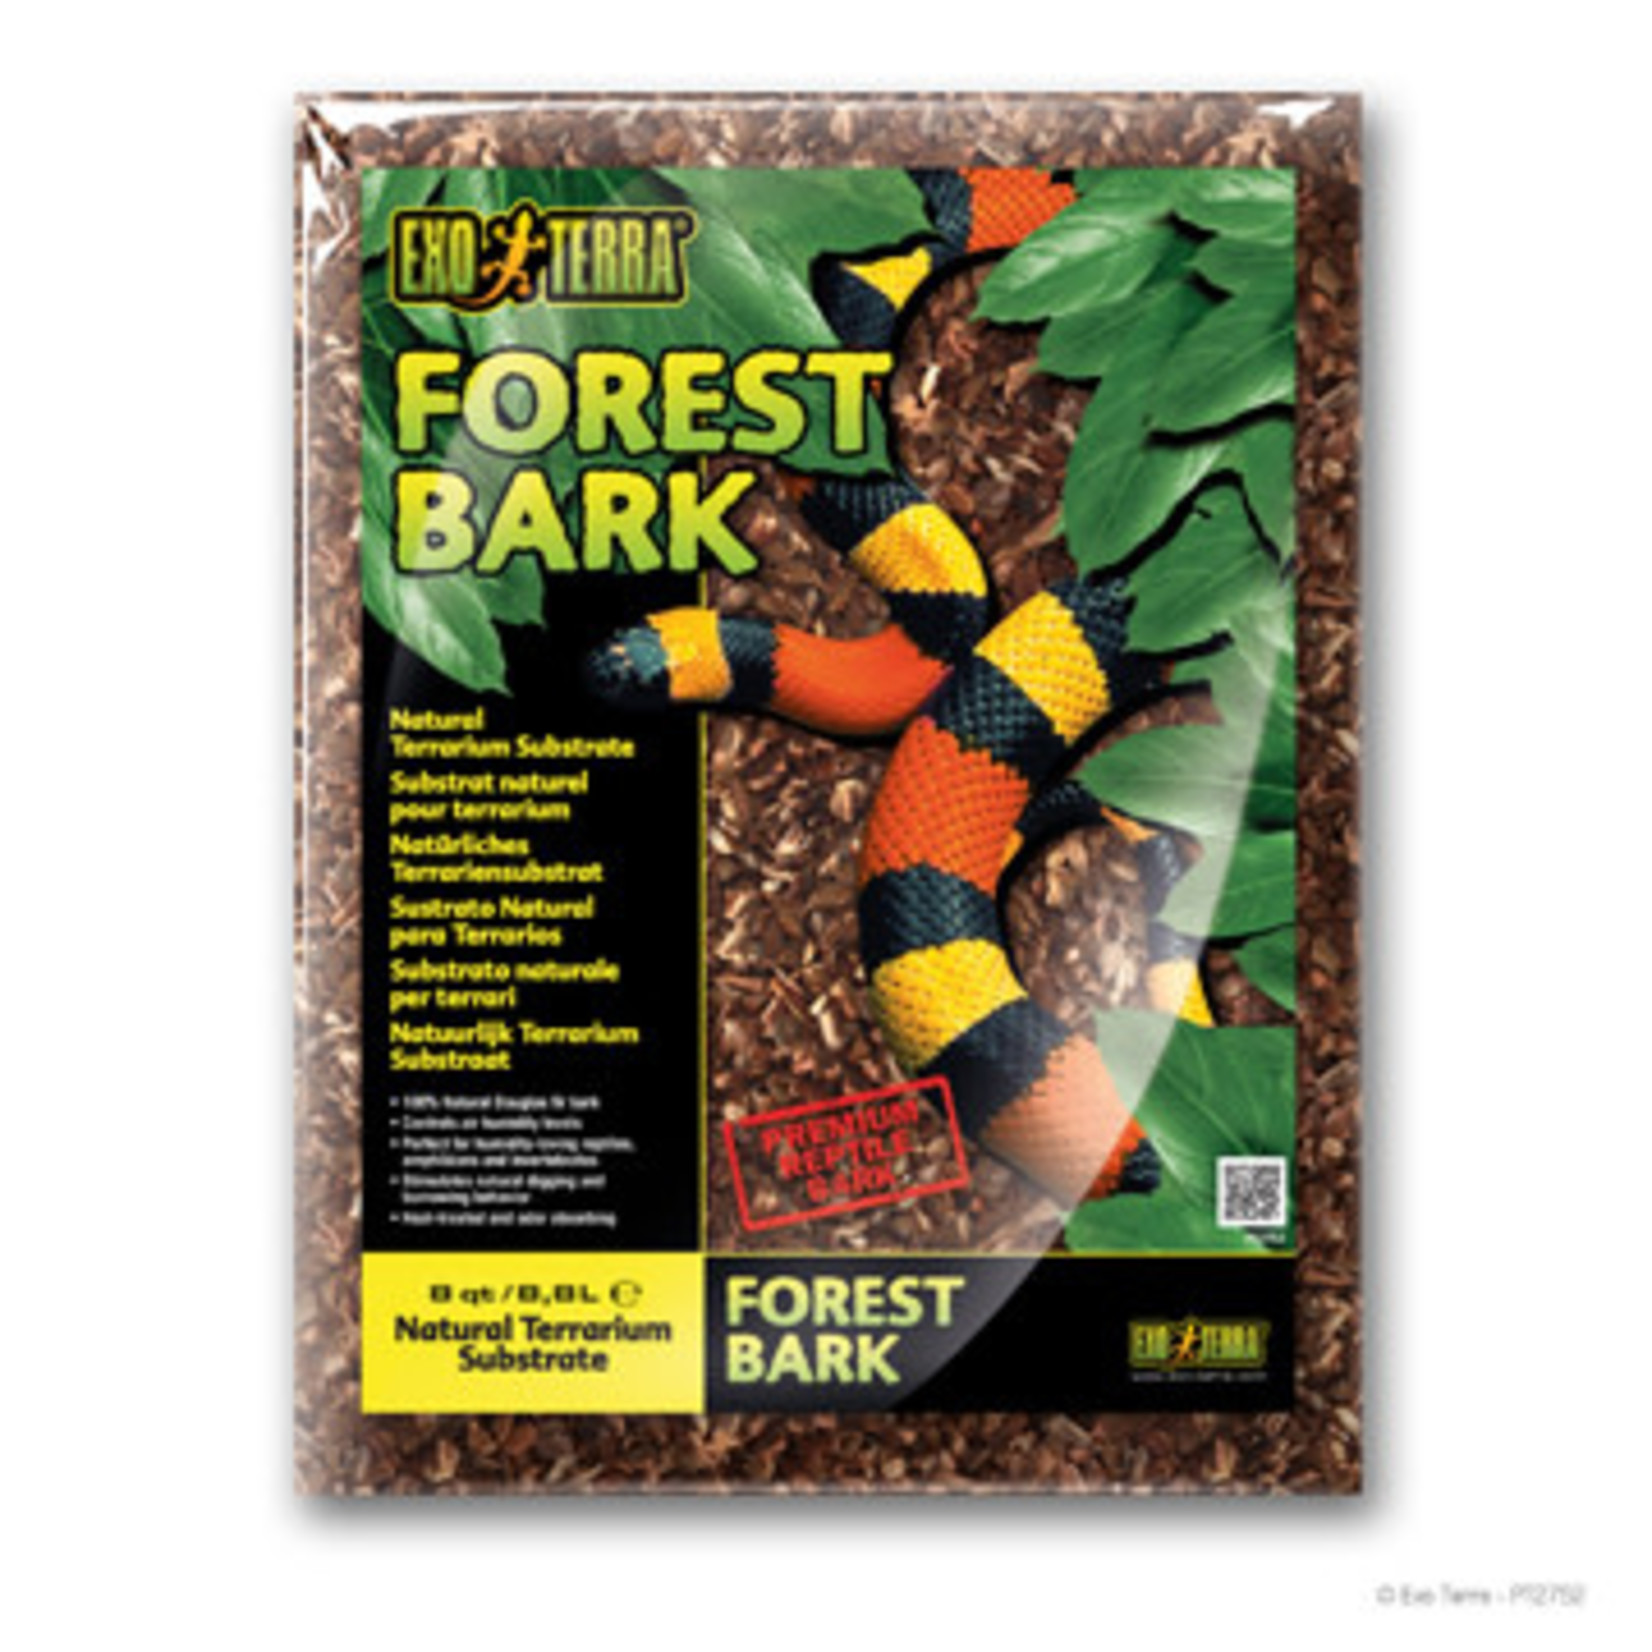 EXO-TERRA Exo Terra Forest Bark, 8 qt.